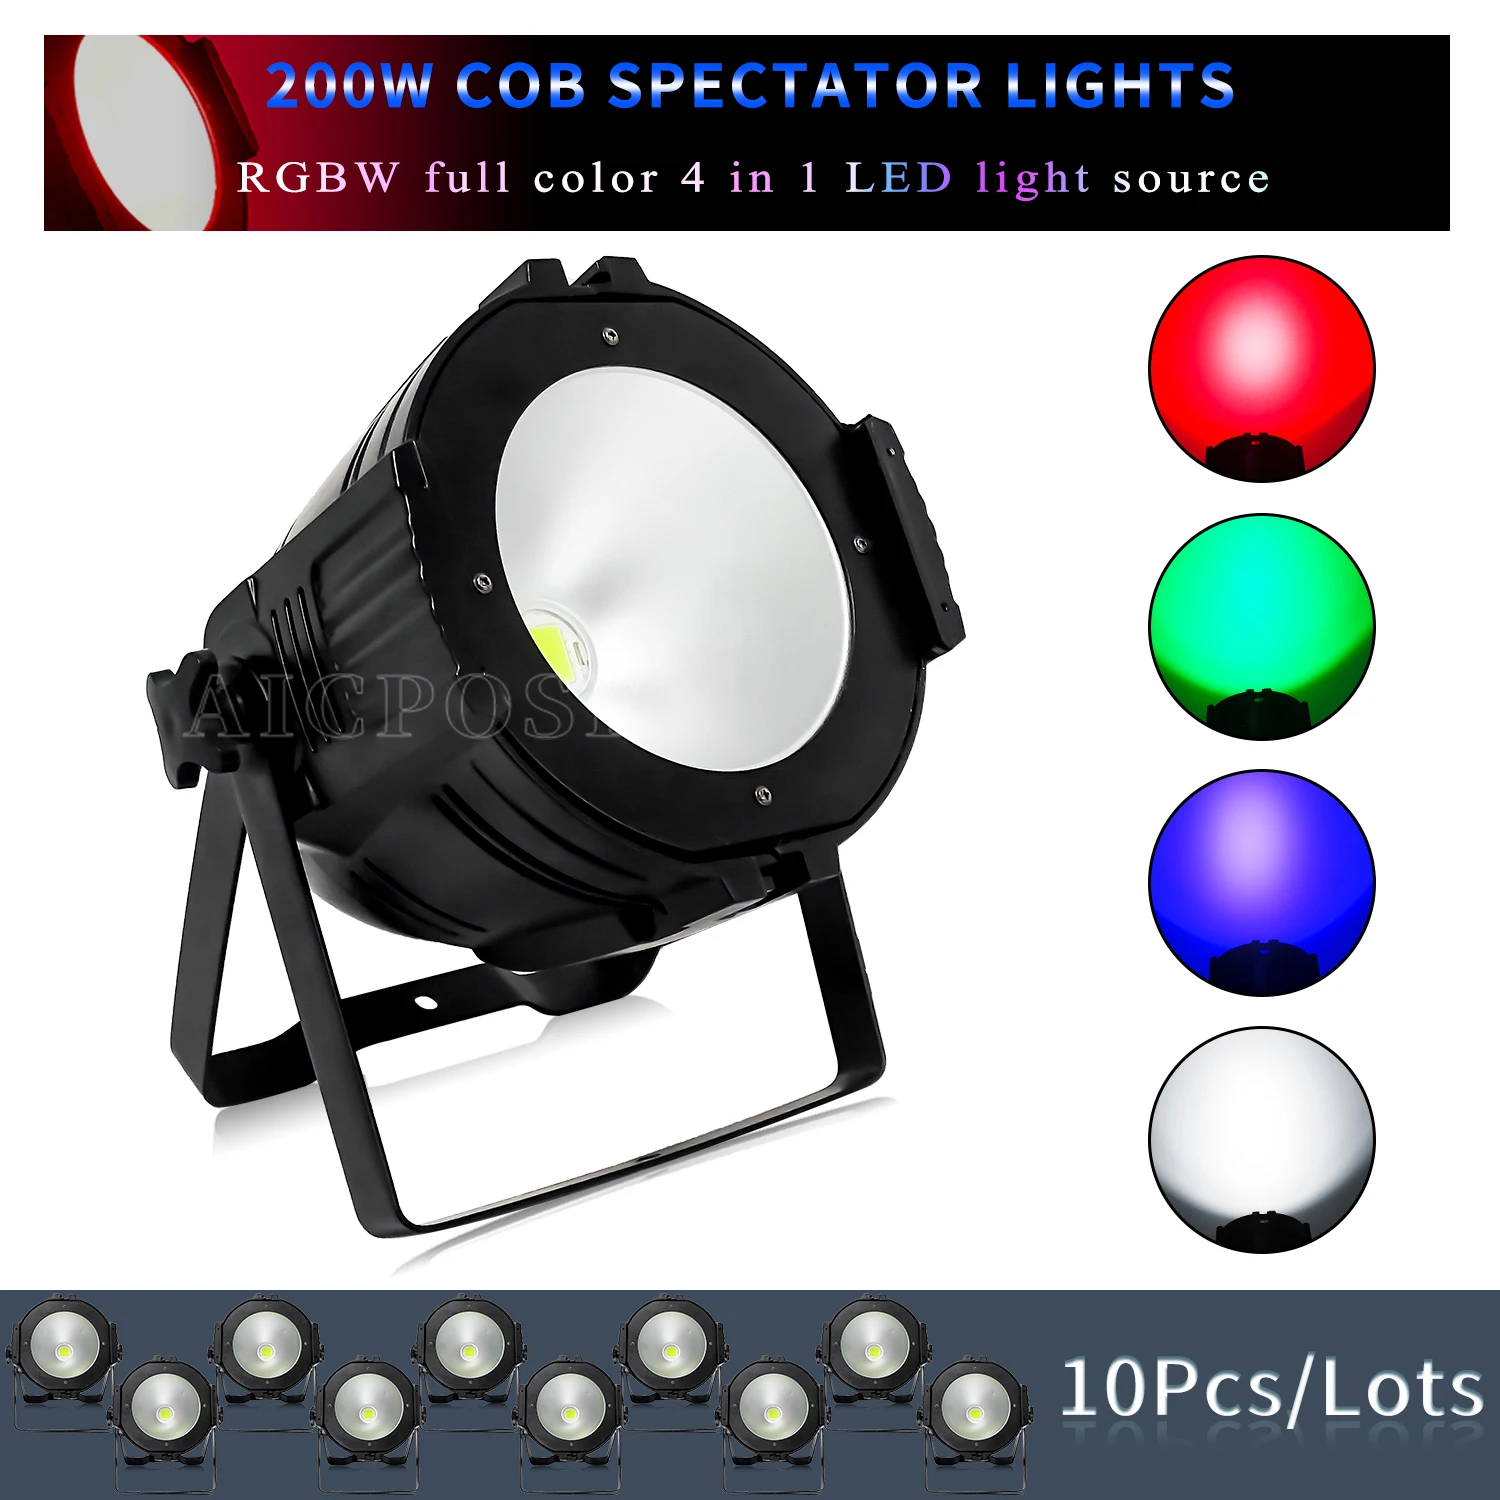 

10Pcs/Lots 200W RGBW 4 in 1 COB Stage Spotlight Aluminum LED Par Light DMX512 Control Professional DJ Disco Equipment Lighting